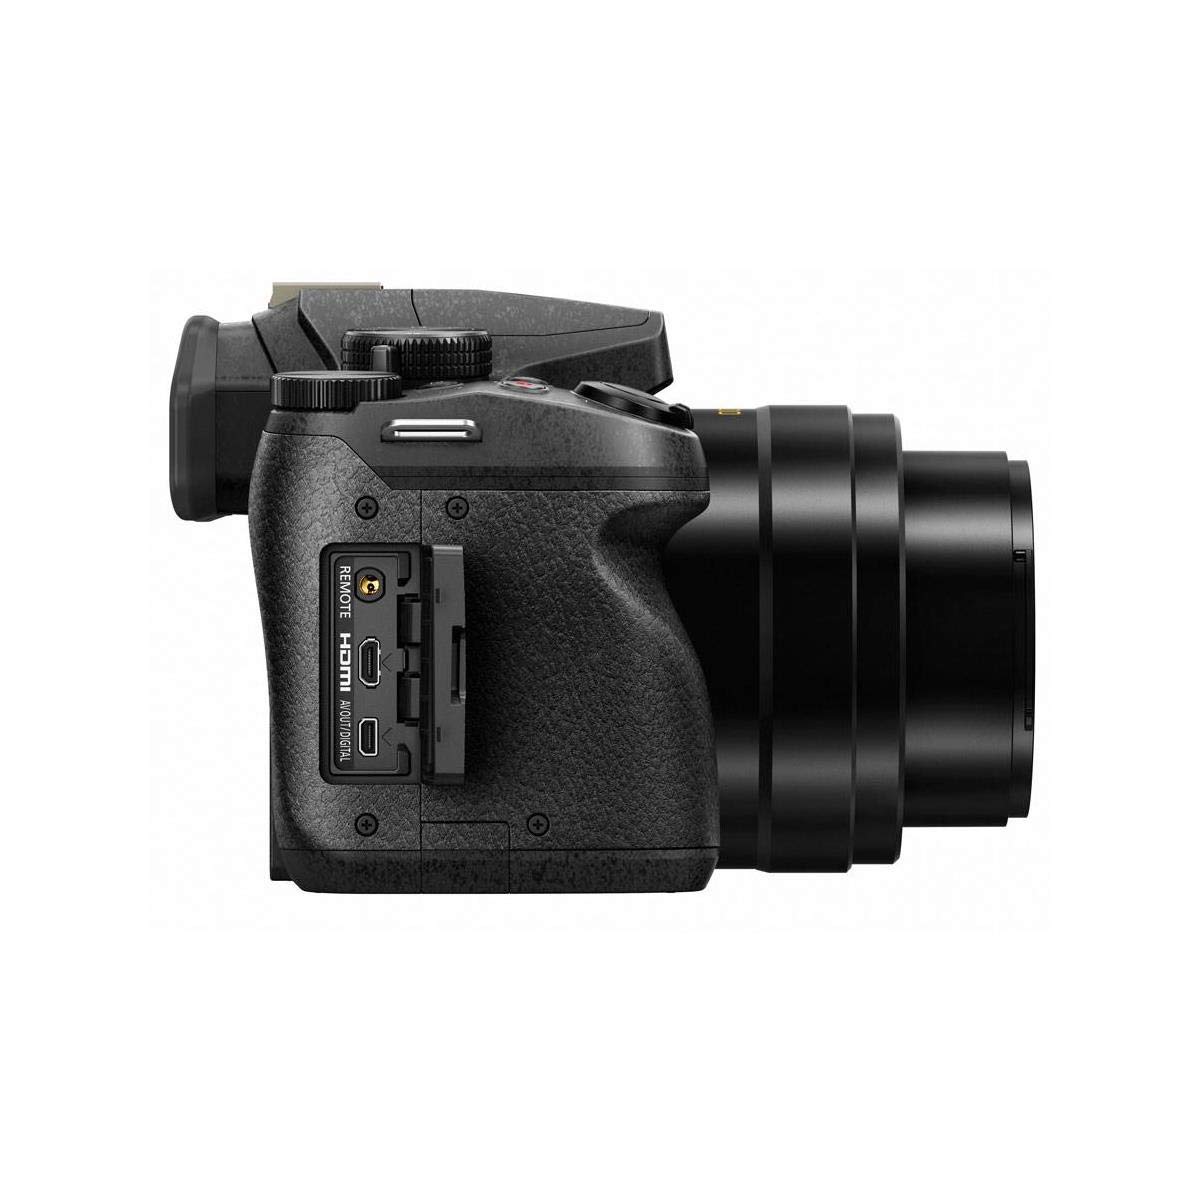 Panasonic Lumix DMC-FZ300 Digital Camera, 12.1 Megapixel, 1/2.3-inch Sensor, 4K Video, 24X Zoom Lens F2.8 Bundle with Bag, Filter, Battery, 64GB SD Card + Case, Tripod, PC Software, Cleaning Kit